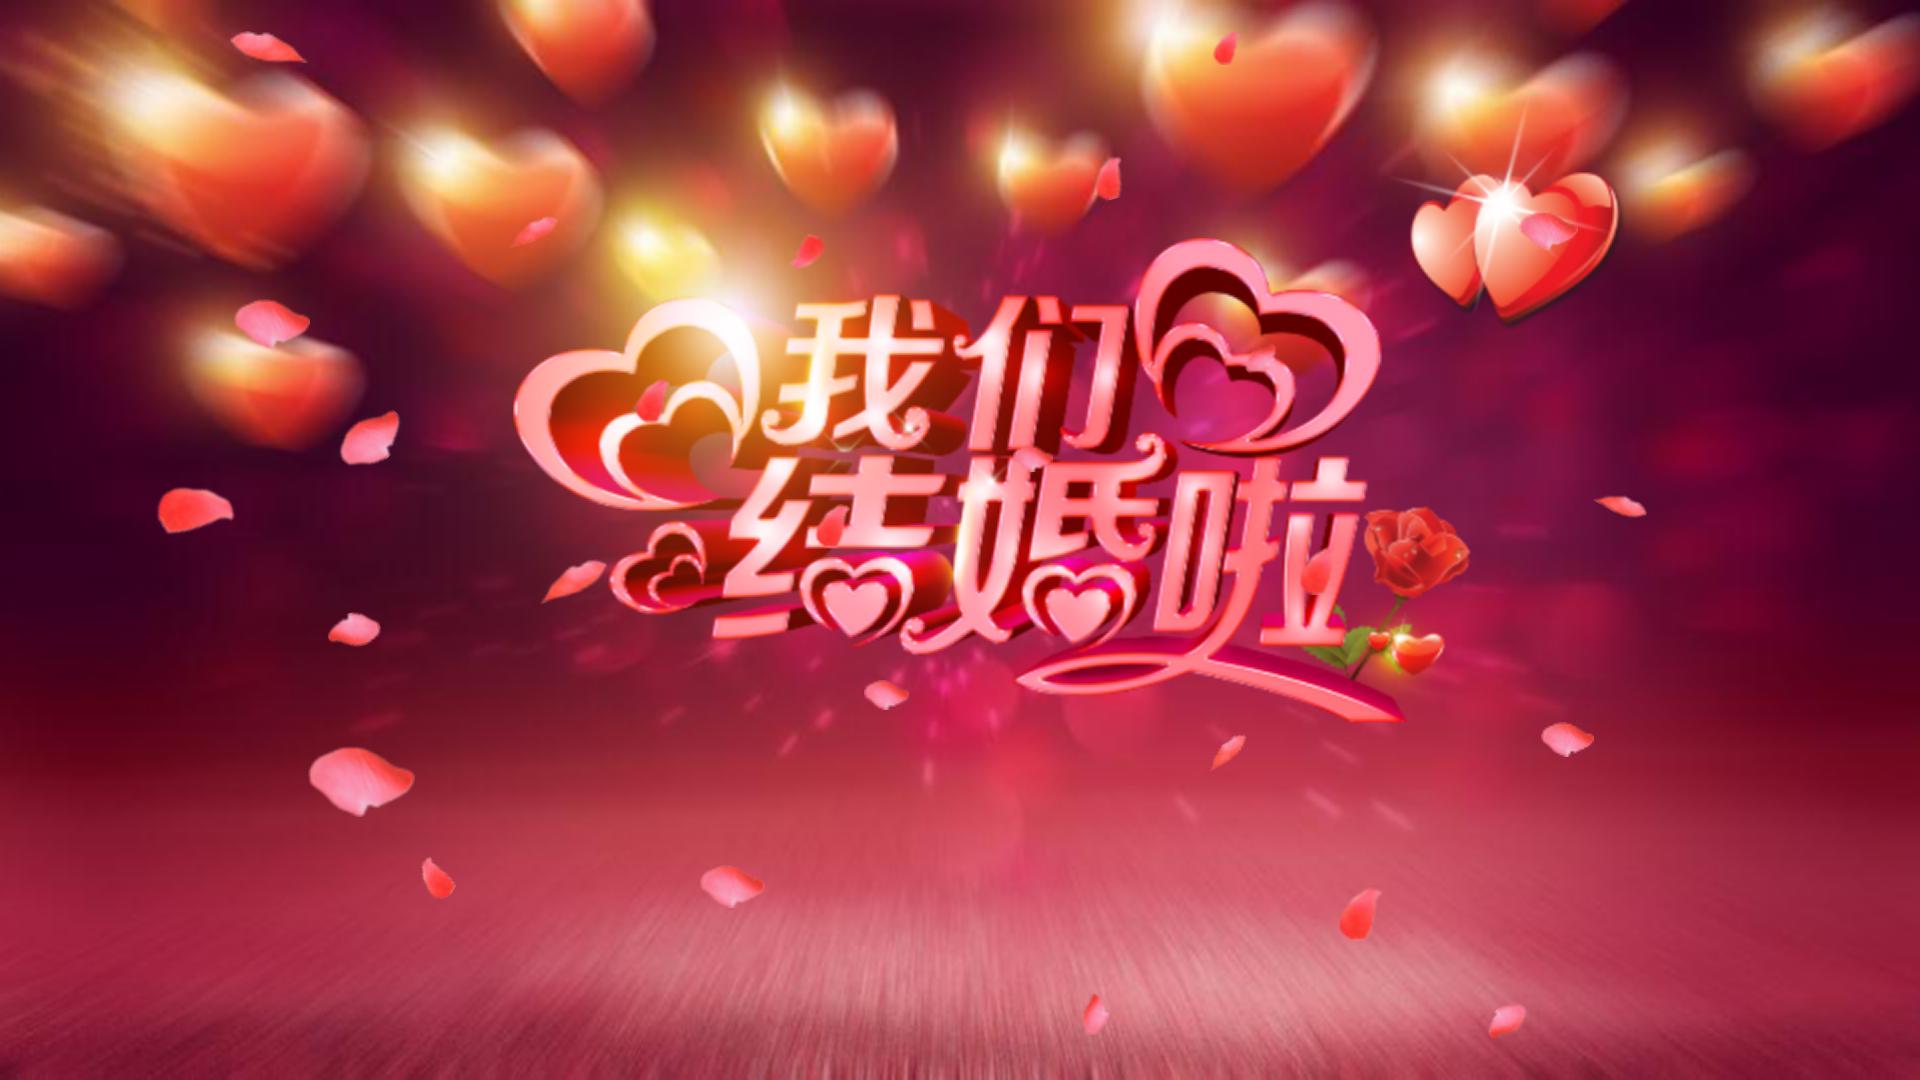 LOVE婚礼背景图片下载_红动中国